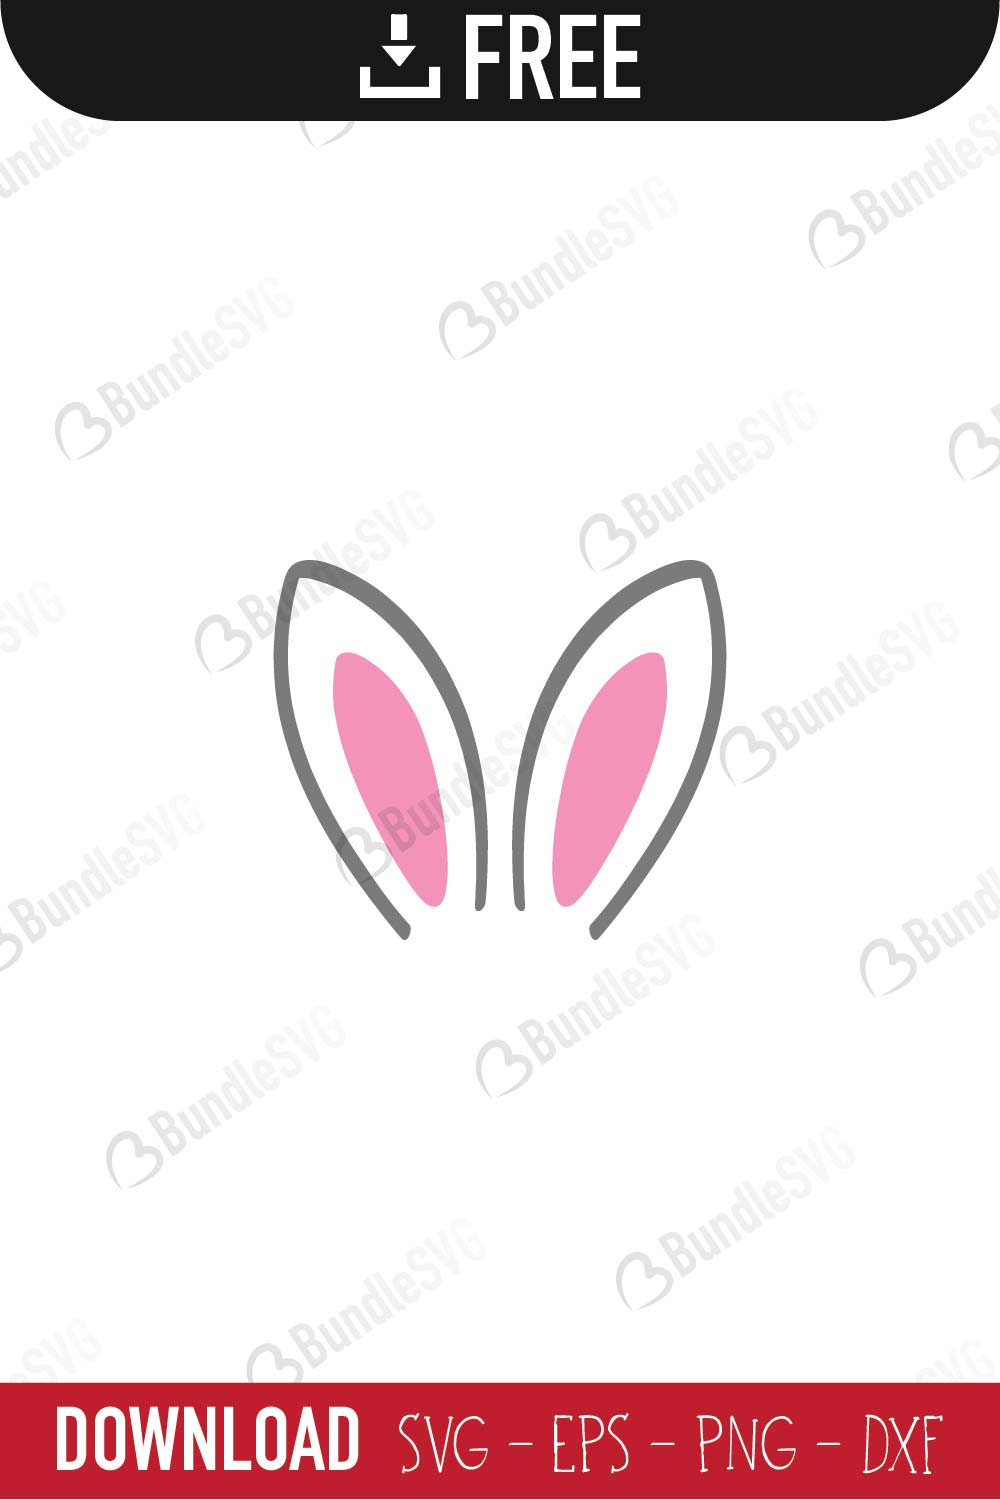 Bunny Ears SVG Cut Files Free Download | BundleSVG.com